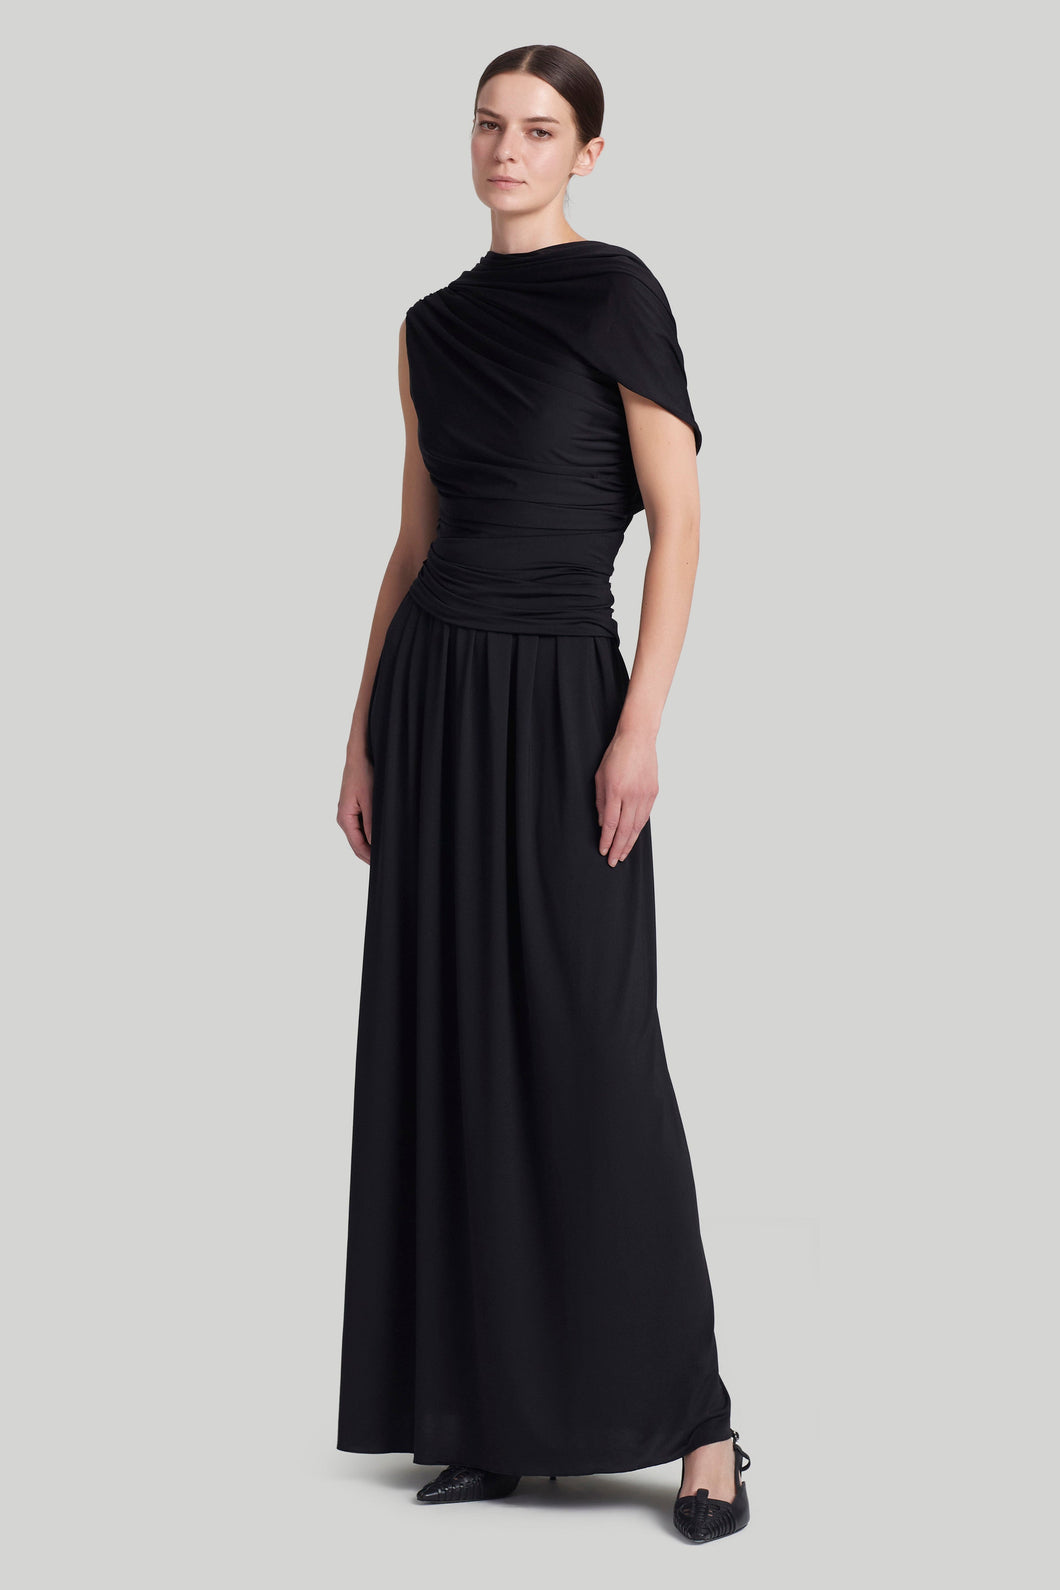 Altuzarra_'Delphi' Dress-Black